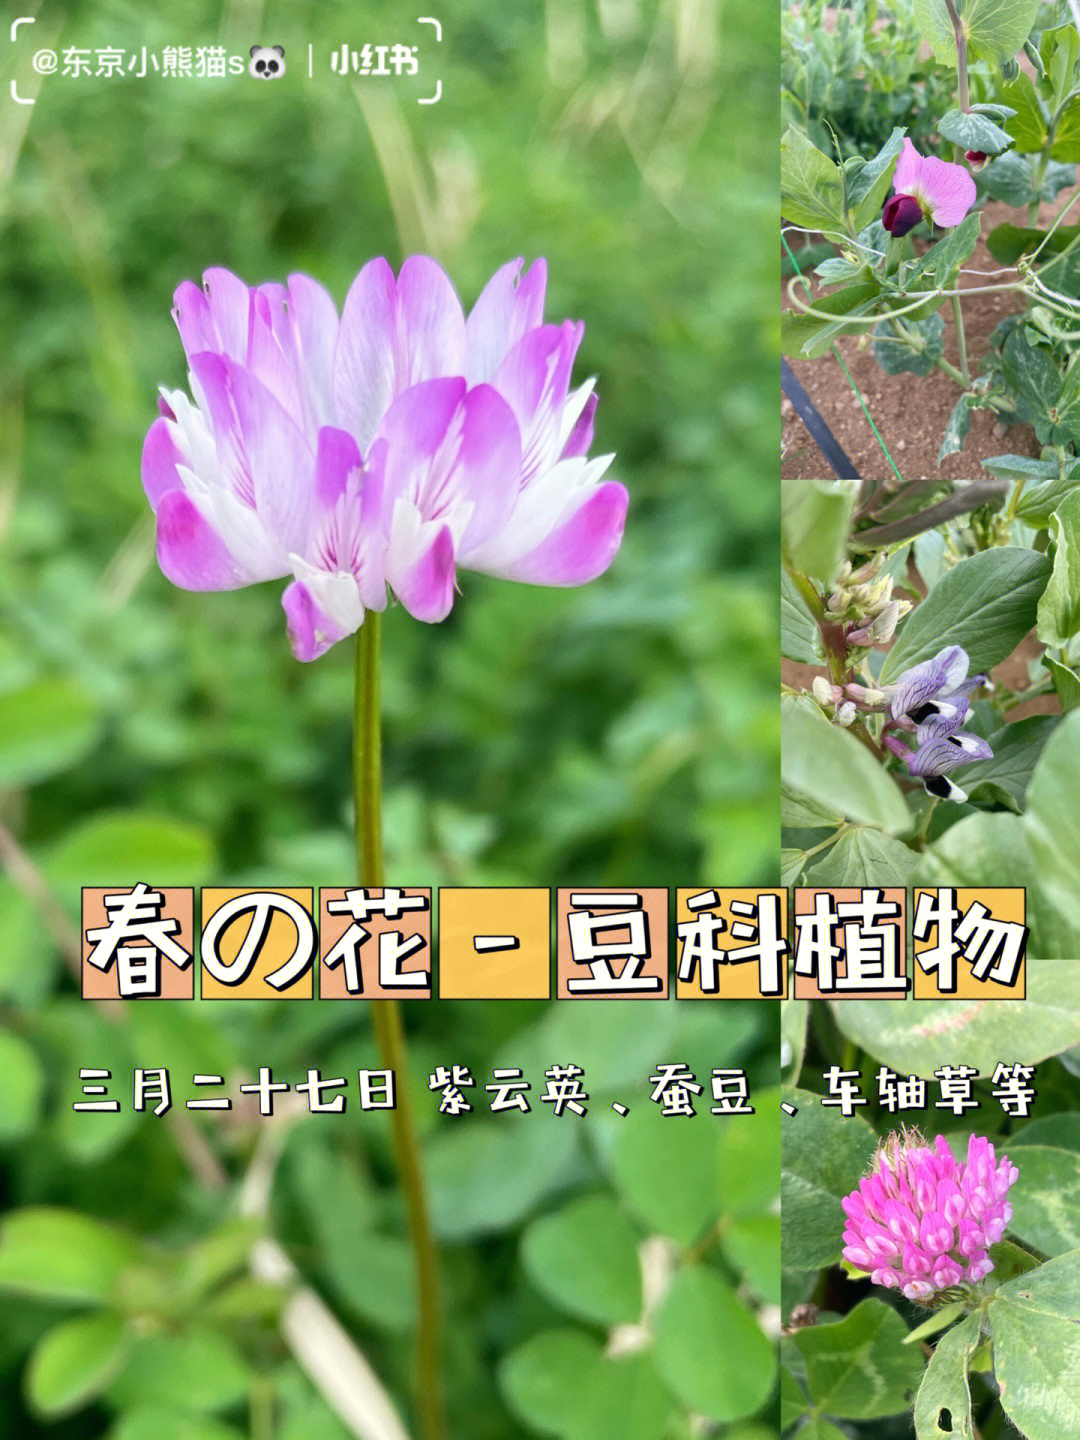 sapix学习春の花豆科植物理科図鉴